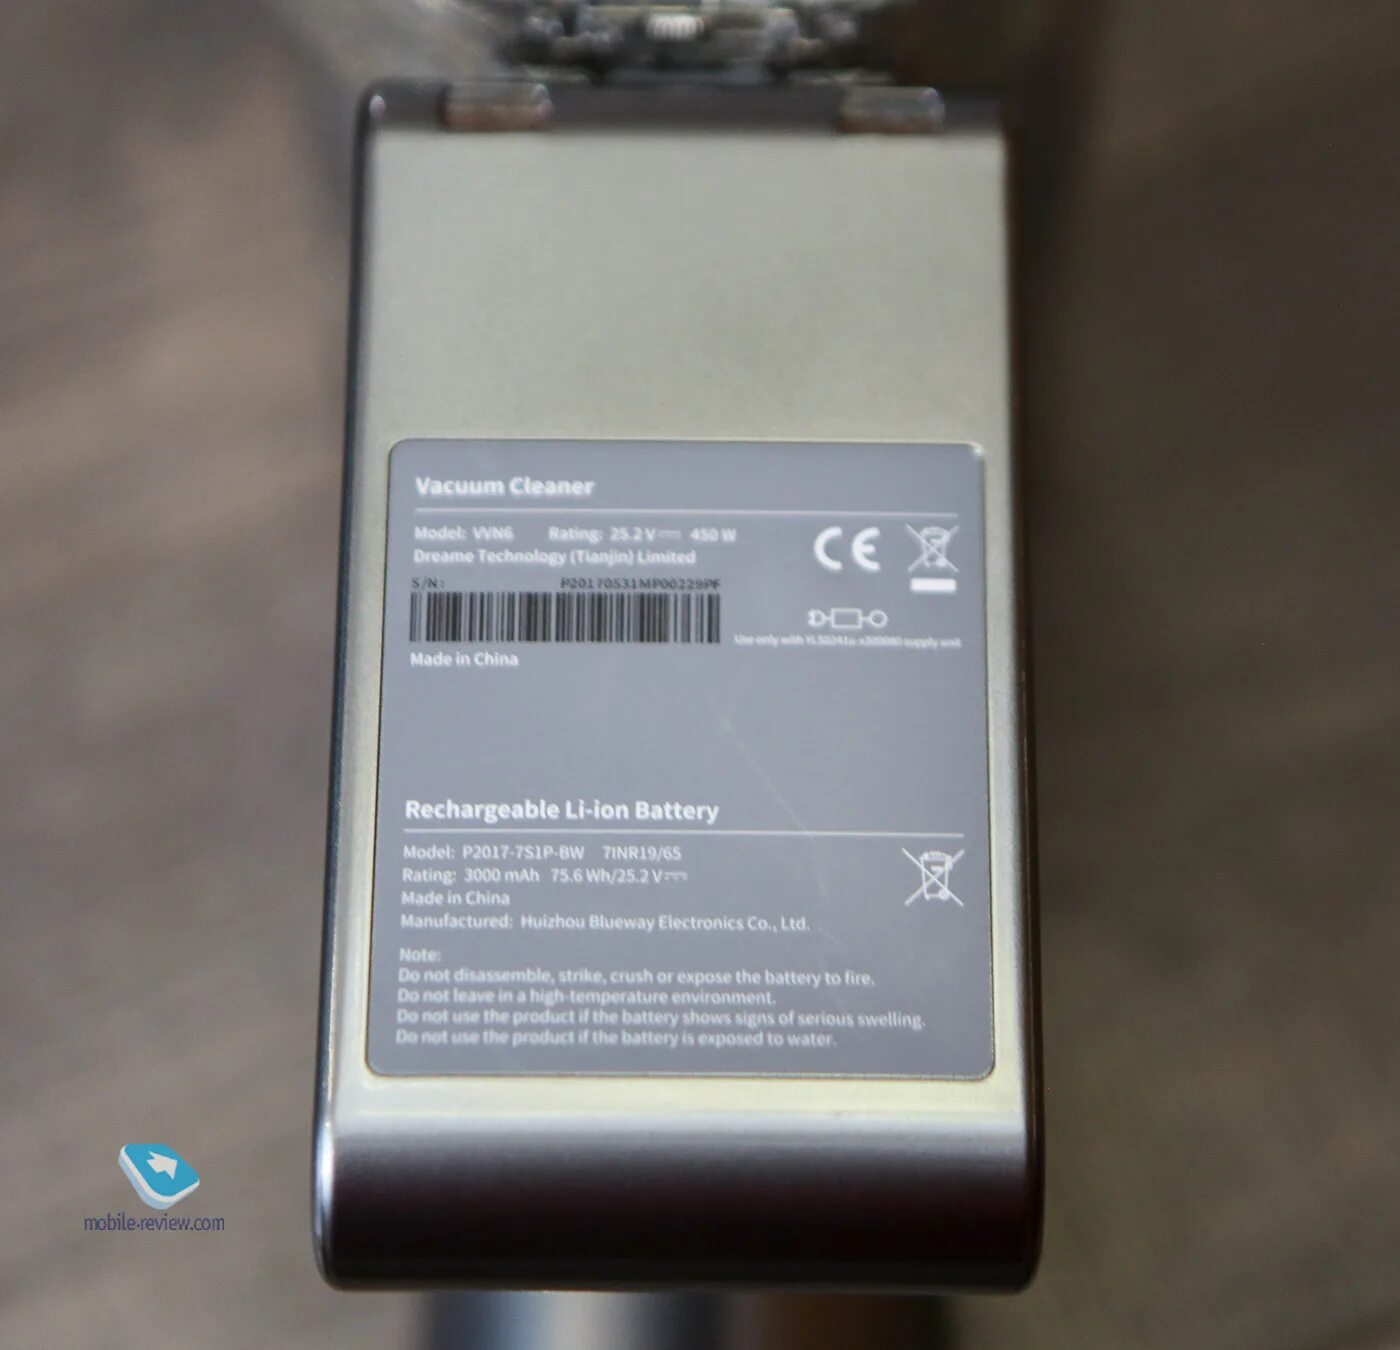 Vacuum Cleaner Xiaomi v11. Аккумулятор для пылесоса Xiaomi Dreame v11. Аккумулятор для пылесоса Xiaomi v11. Dreame v11 Battery Board. Xiaomi v12 купить